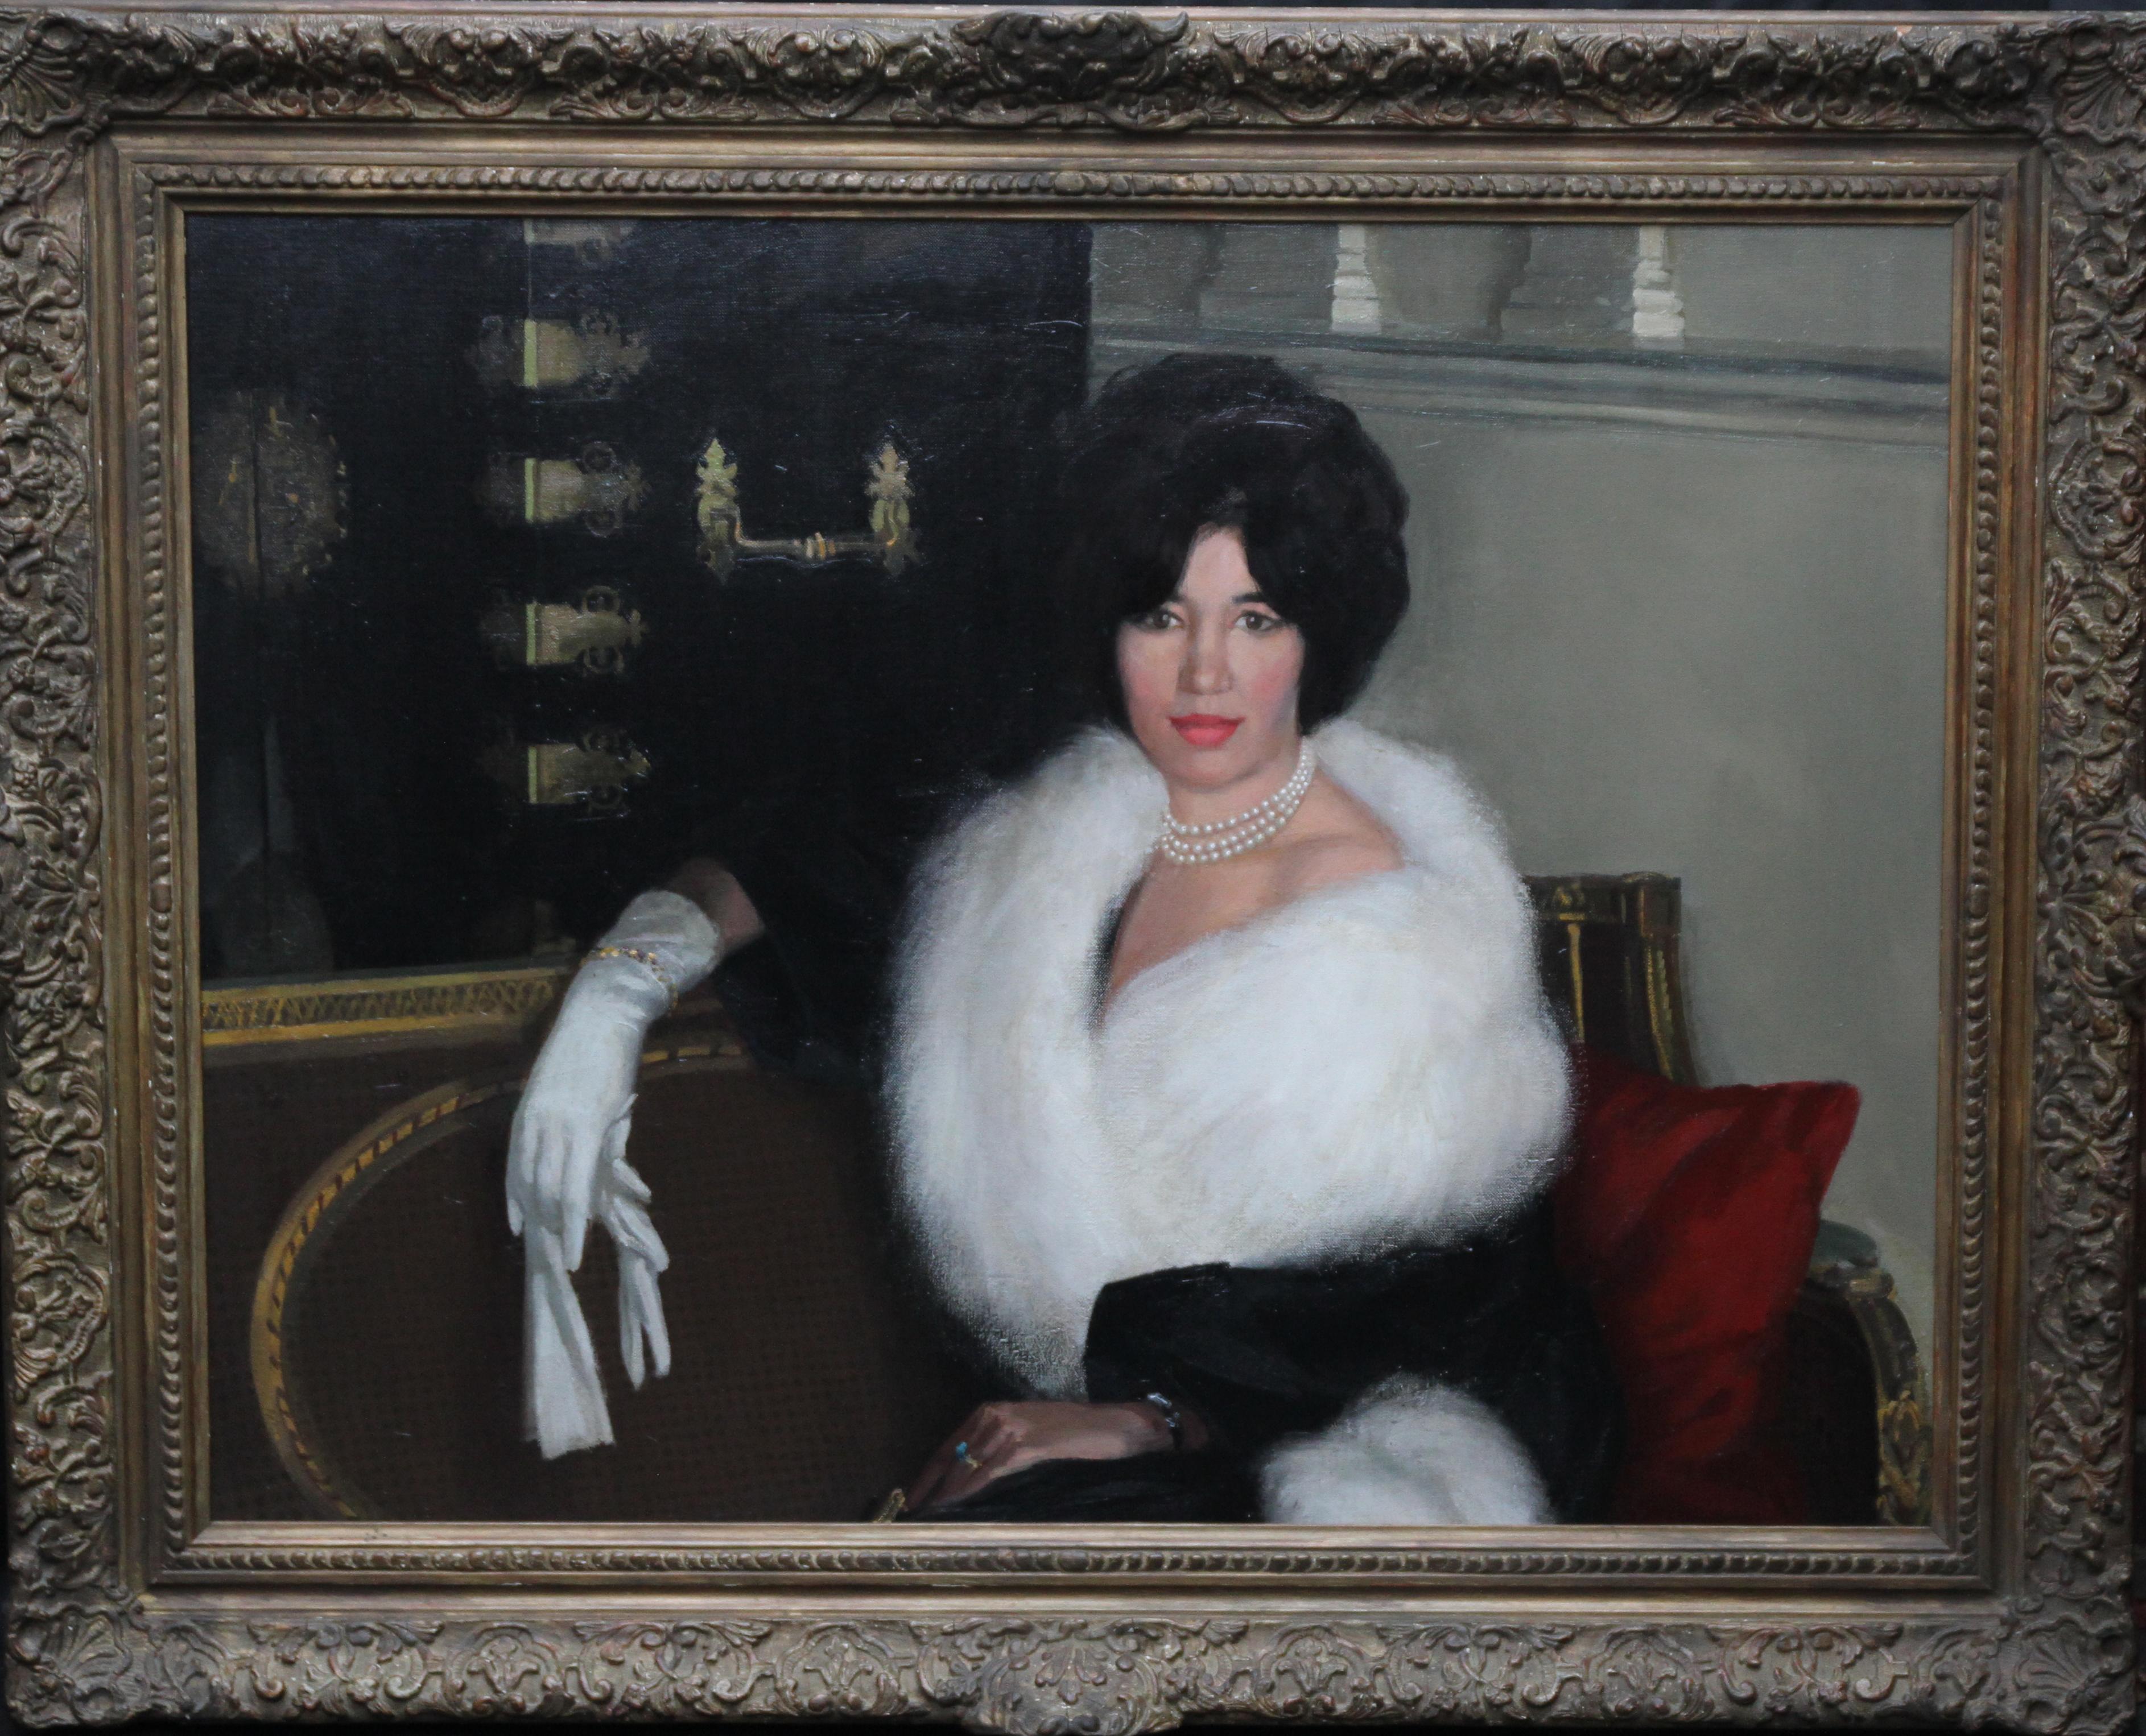 Sir Gerald Festus Kelly (circle) Portrait Painting - Mrs Rona Lucas nee Levey -British art 50s interior female portrait oil painting 